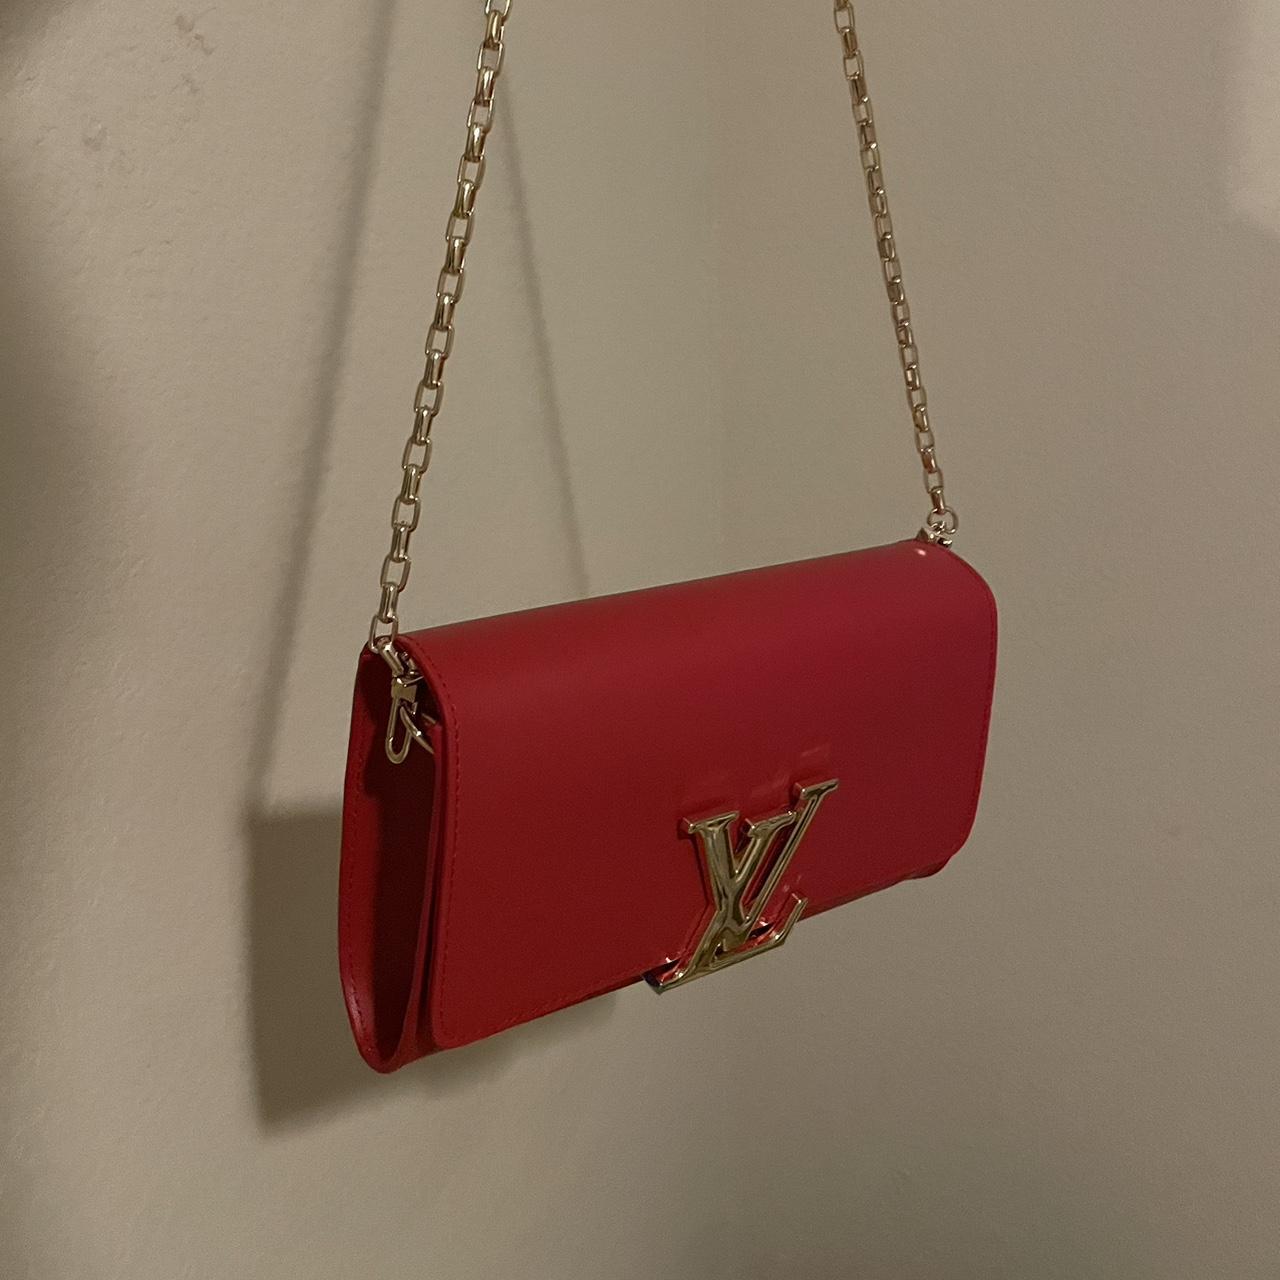 LV RED BAG RED SHOULDER/CLUTCH/CHAIN BAG super cute - Depop